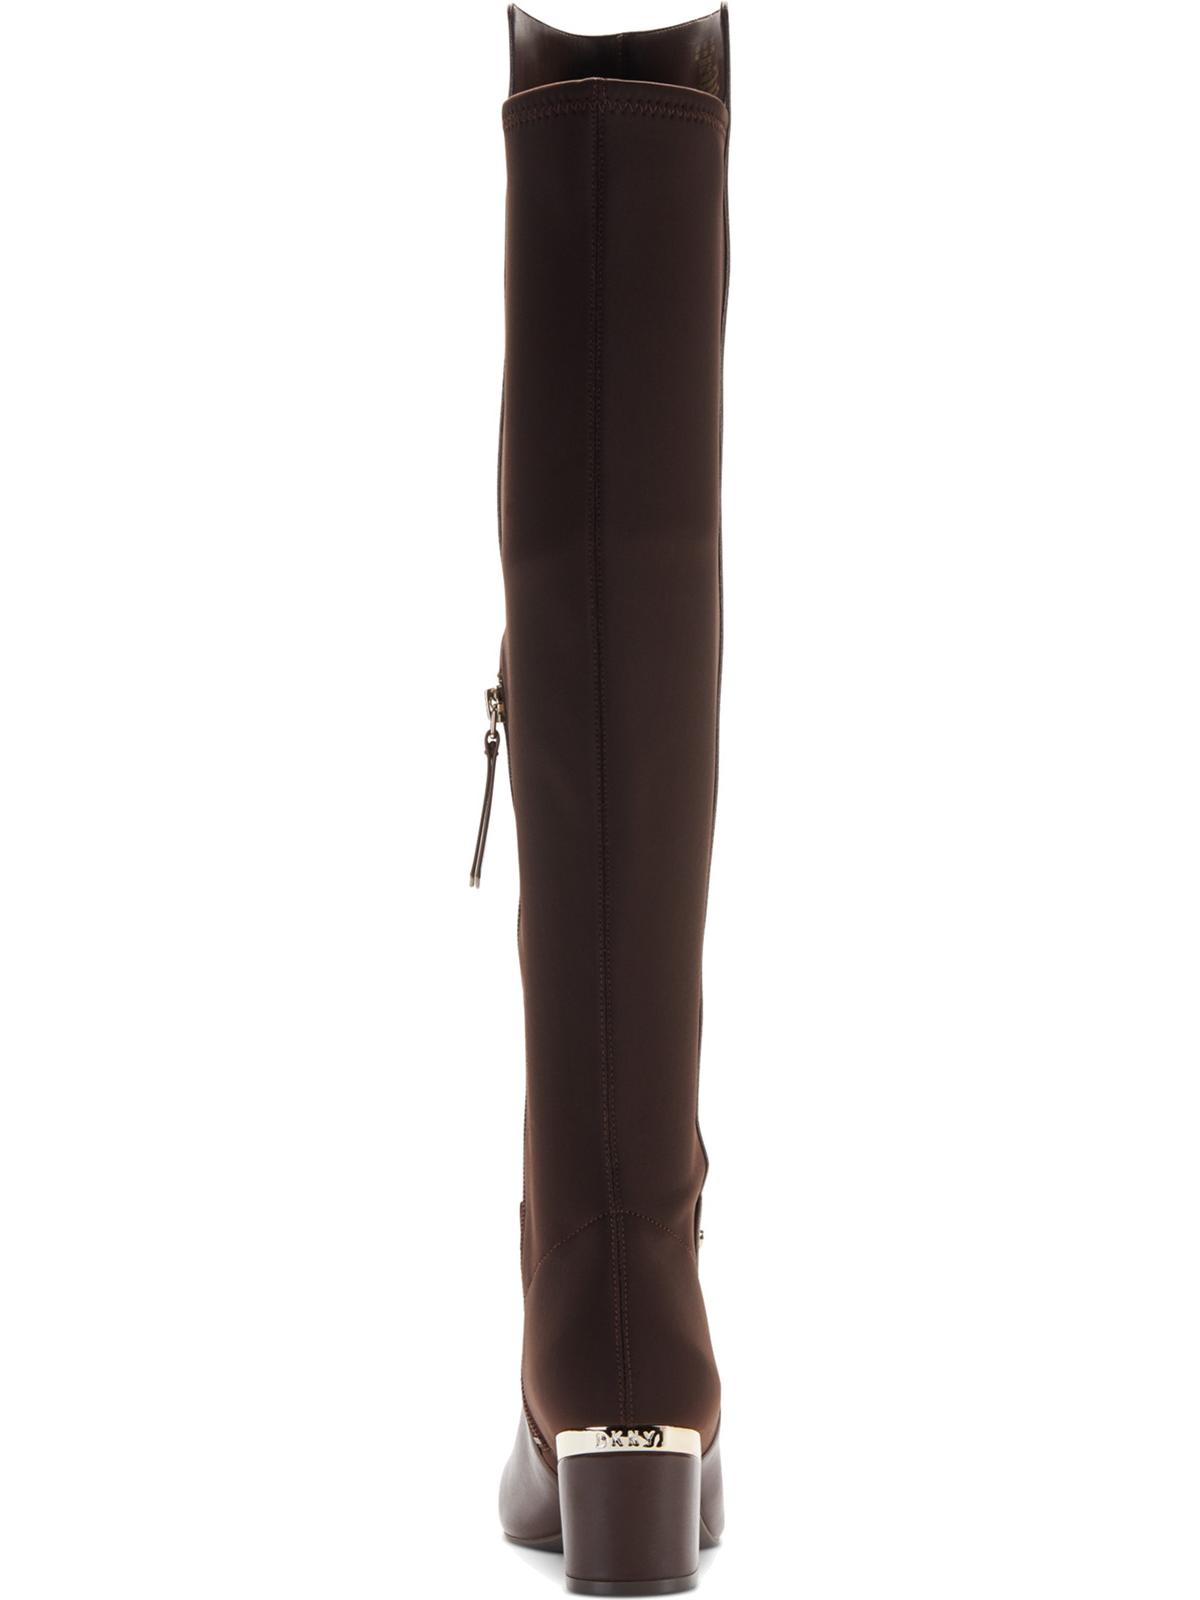 DKNY Cora Knee Boots - Bark - Size 5M